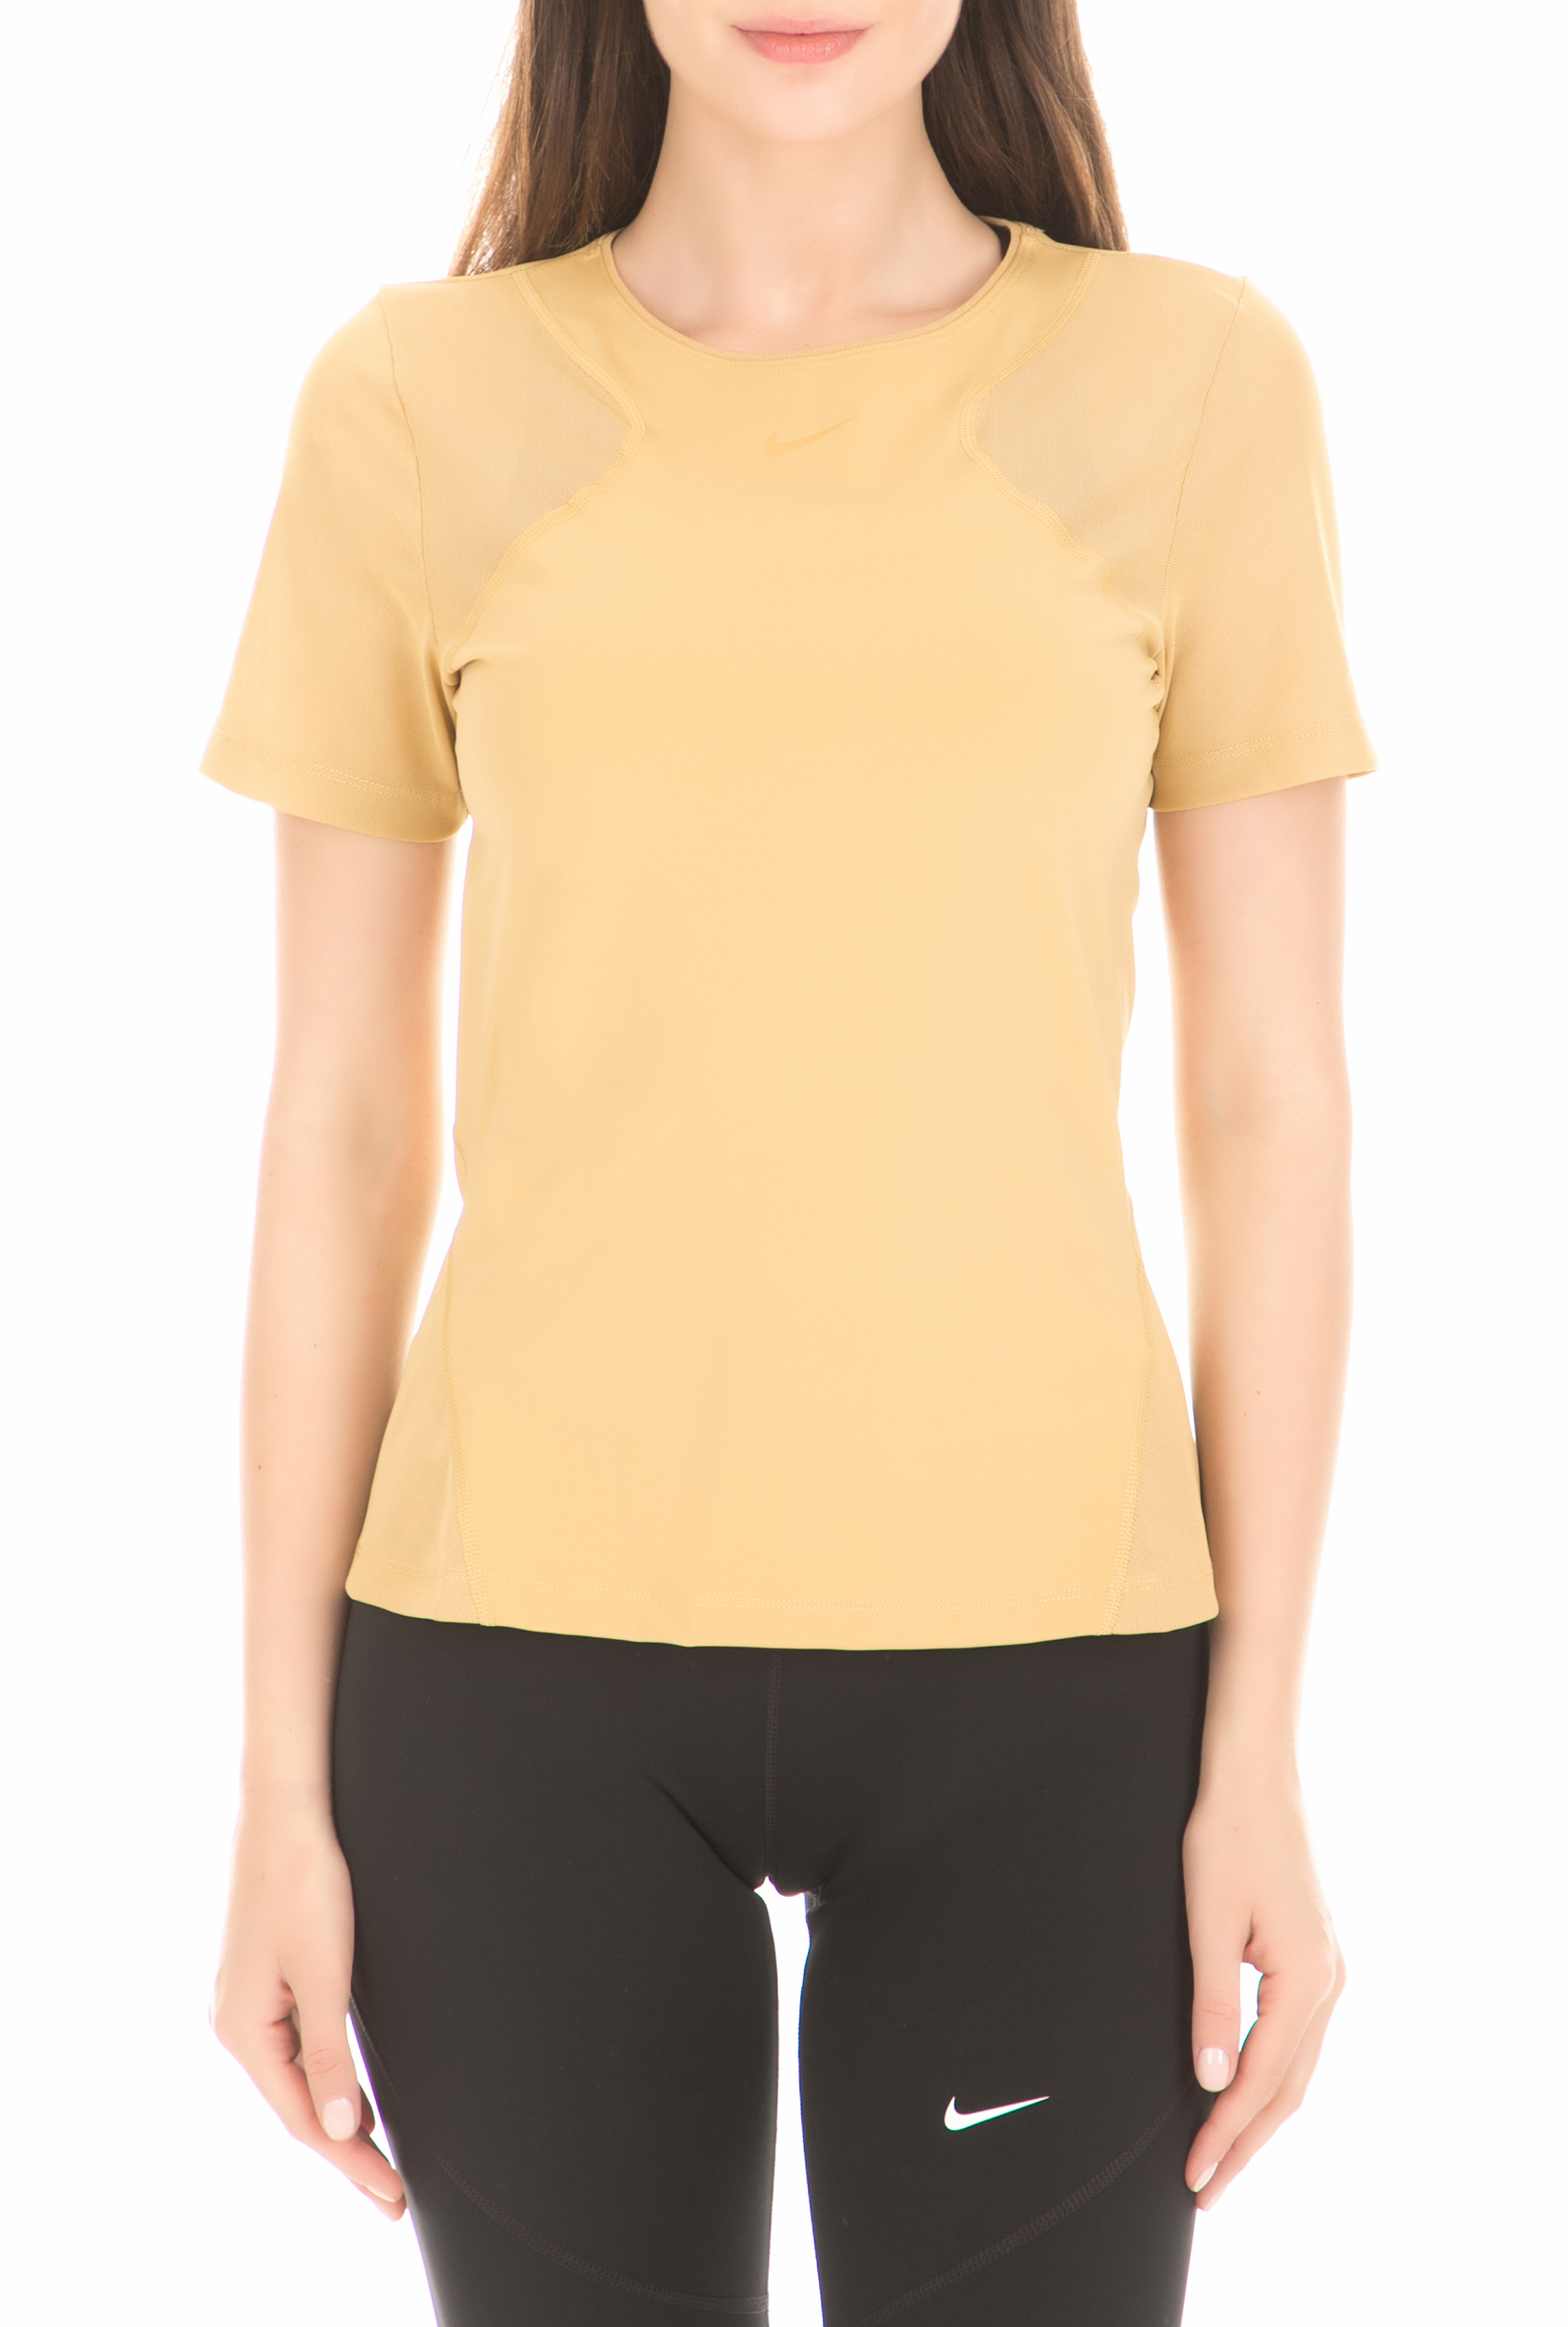 NIKE - Γυναικεία κοντομάνικη μπλούζα Nike Pro HyperCool χρυσή Γυναικεία/Ρούχα/Αθλητικά/T-shirt-Τοπ